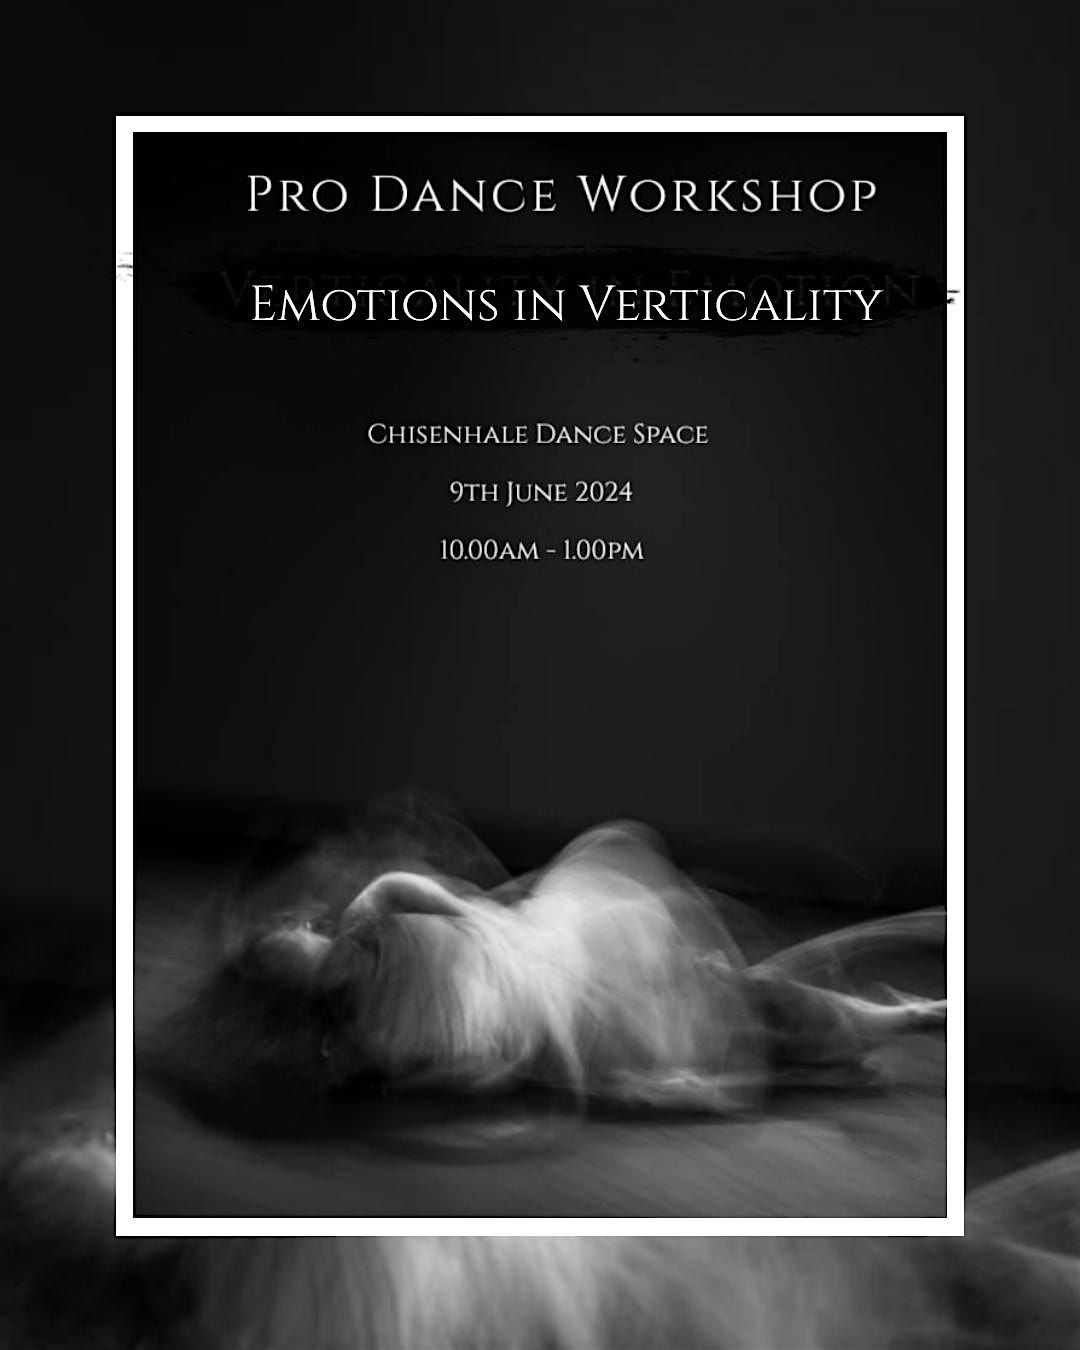 Pro Dance Workshop: Emotions in Verticality